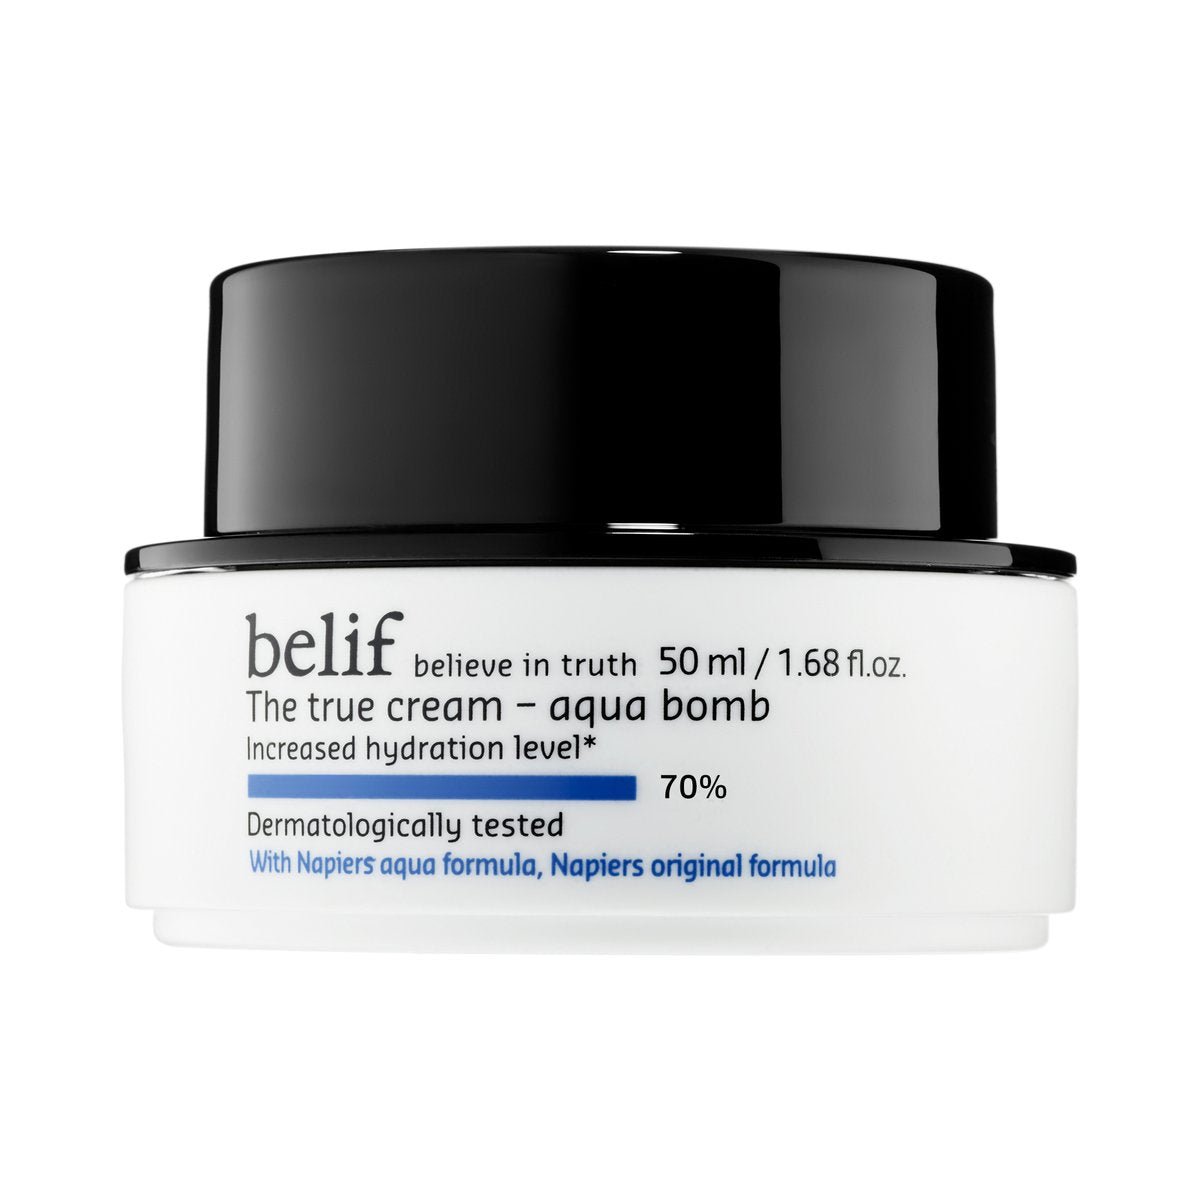 belif THE TRUE CREAM AQUA BOMB 50ml | Moisturizer for Combination to Oily Skin | Face Cream, Hydration, Clean Beauty